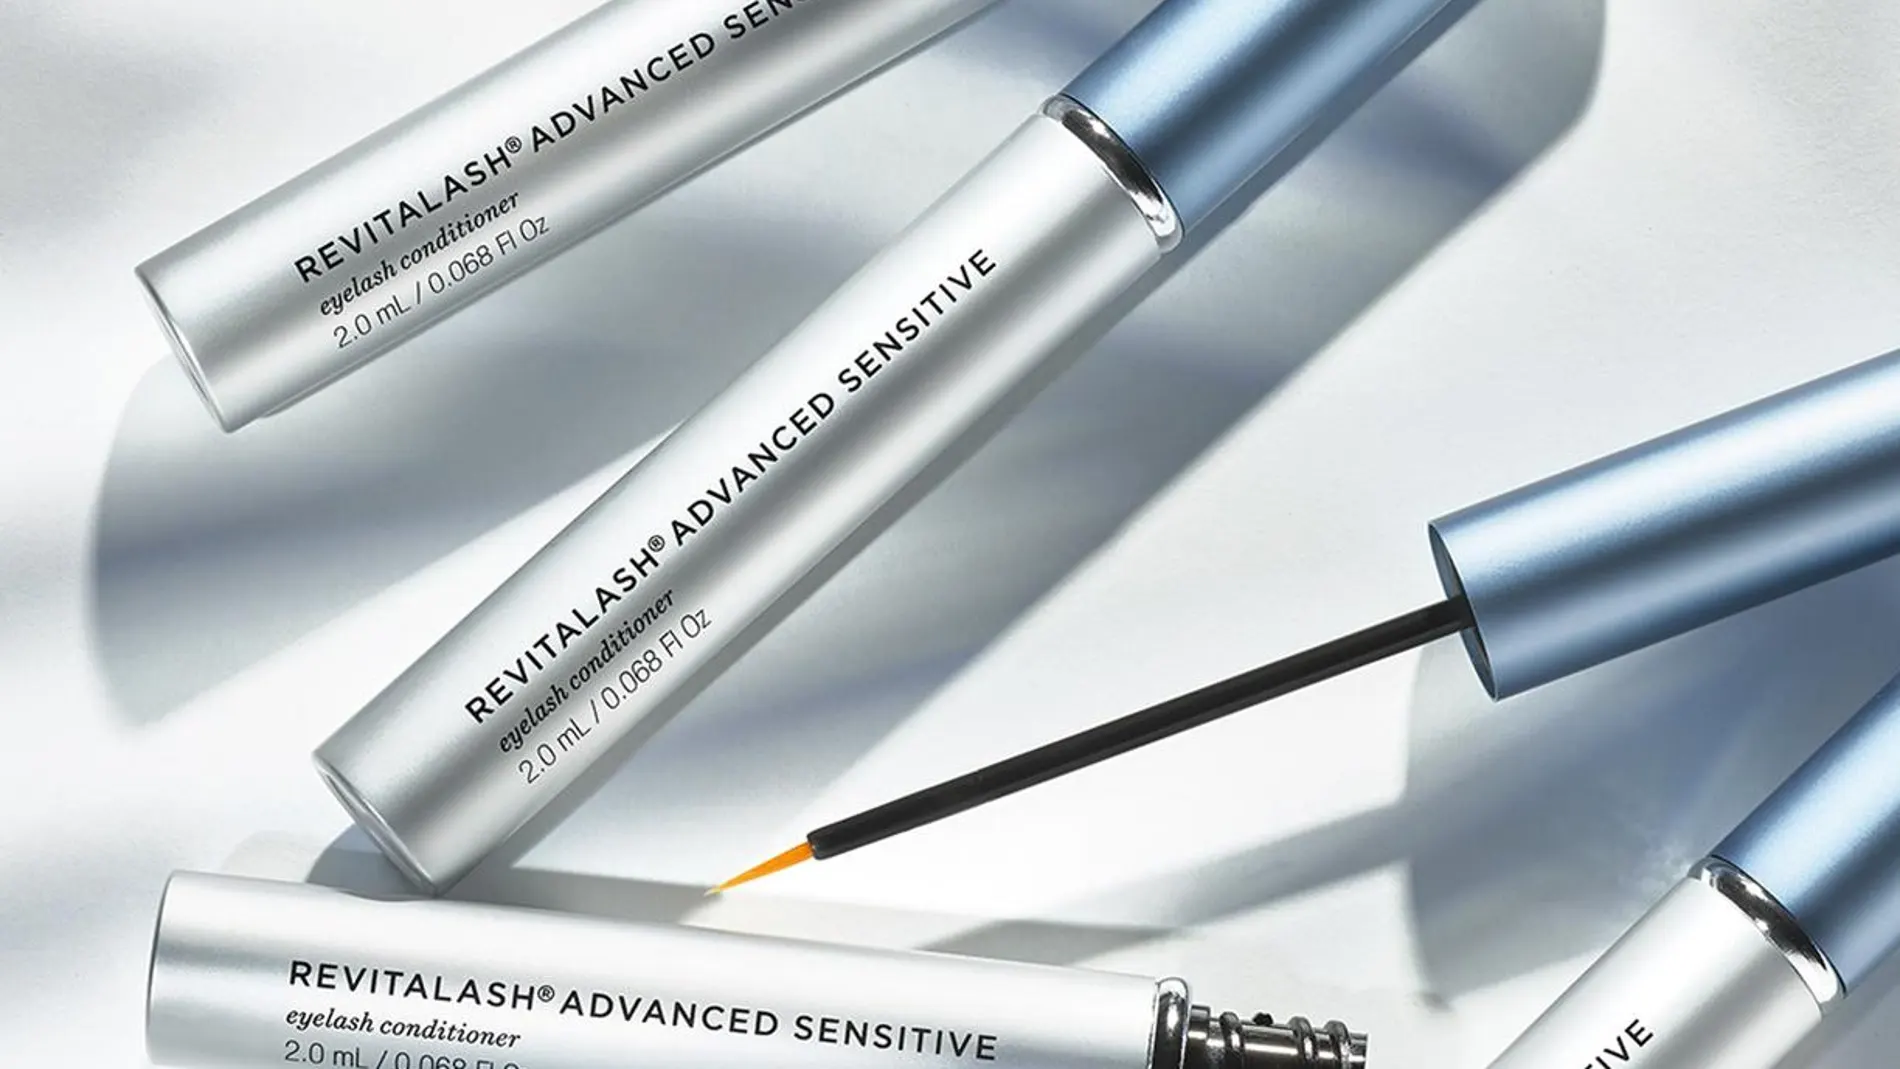 RevitaLash advanced sensitive eyelash conditioner